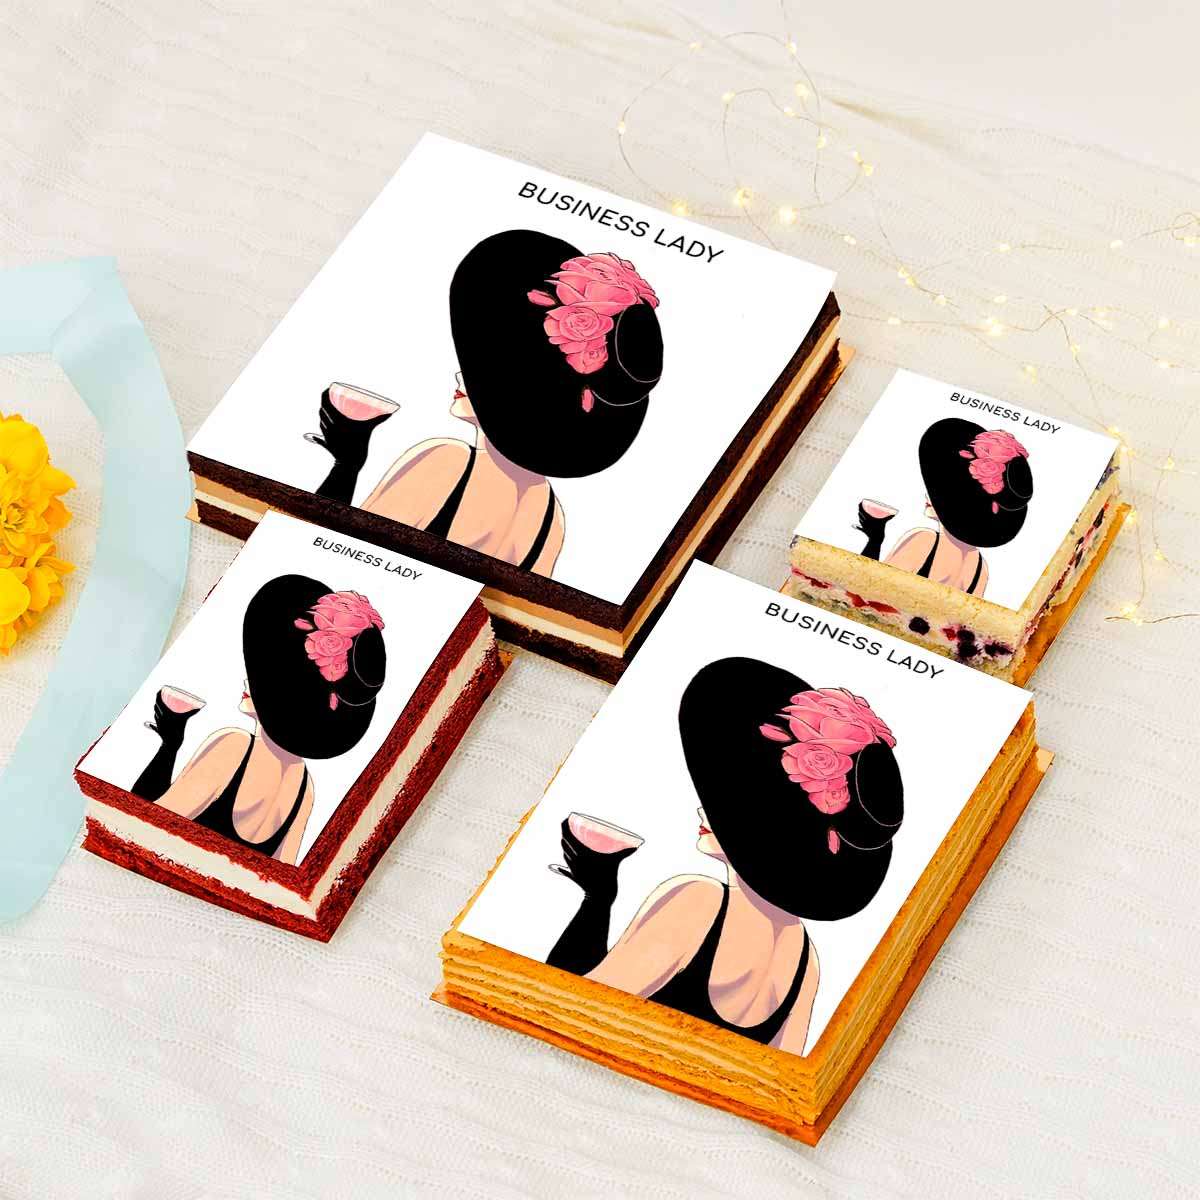 Торт-открытка «Business lady»